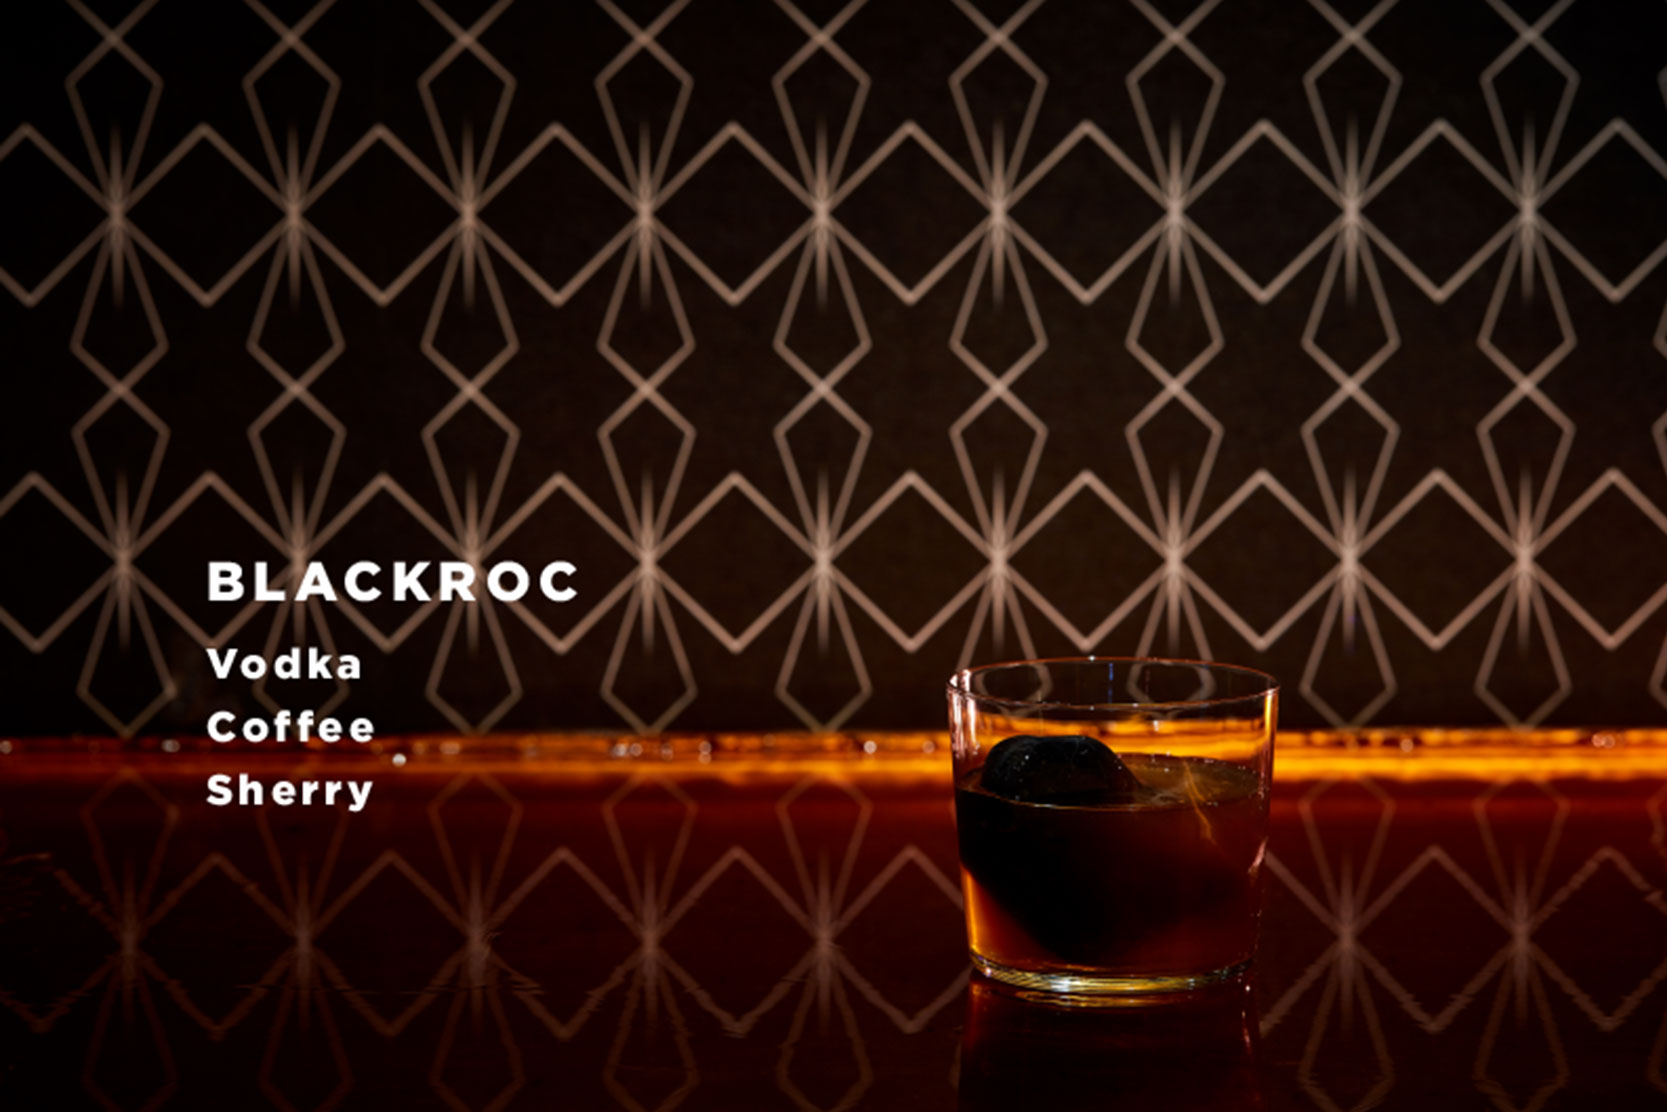 Blackroc-the-grid-cocktail-bar-koeln